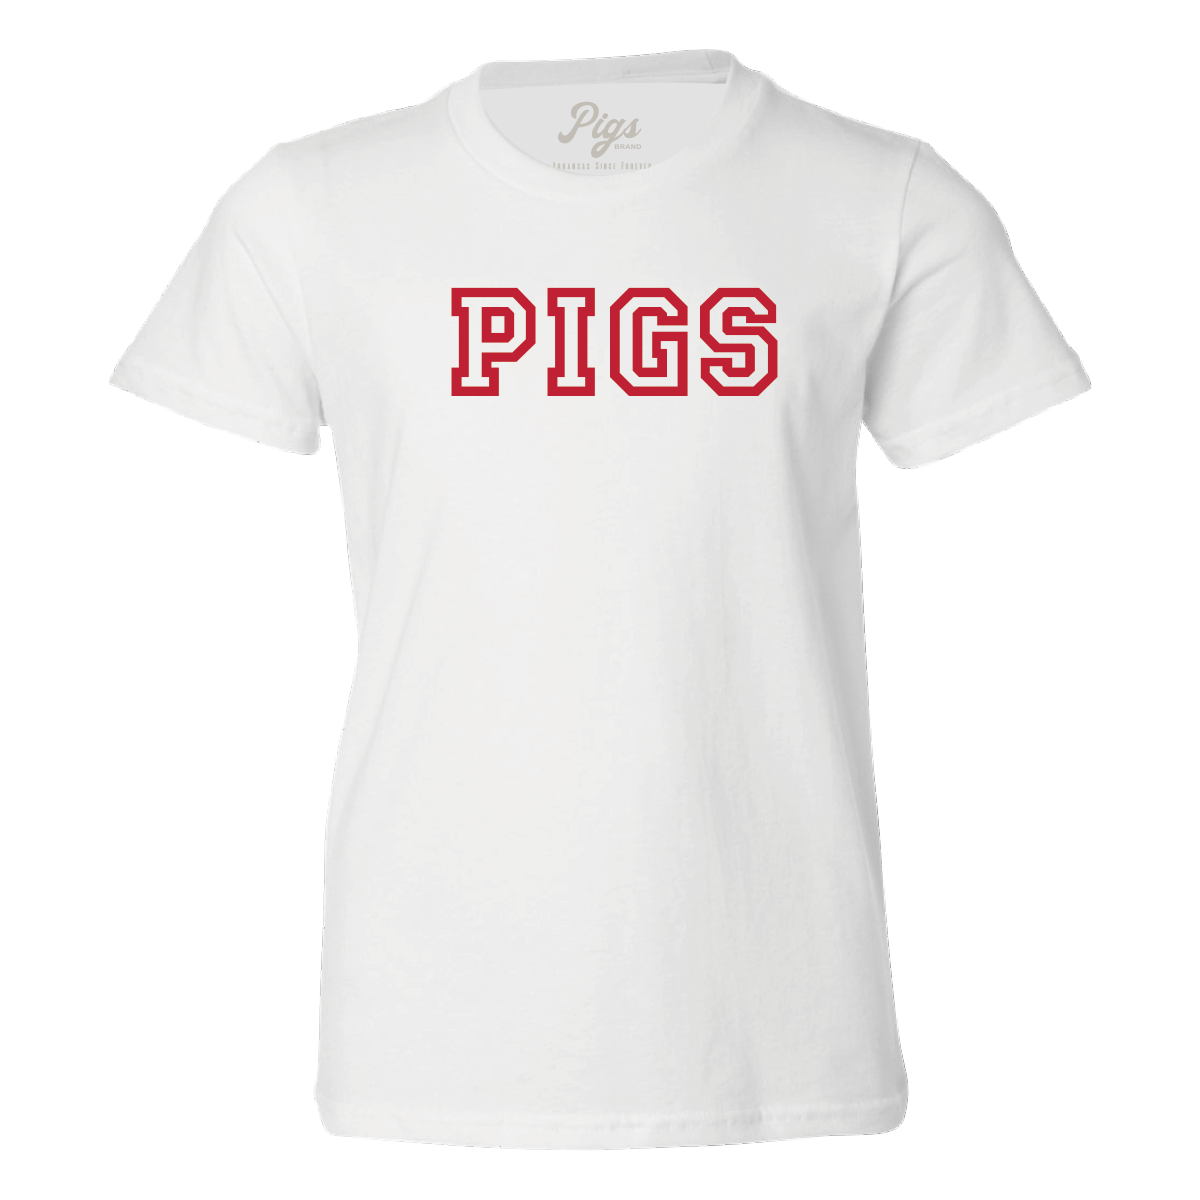 PIGS - Kids - White